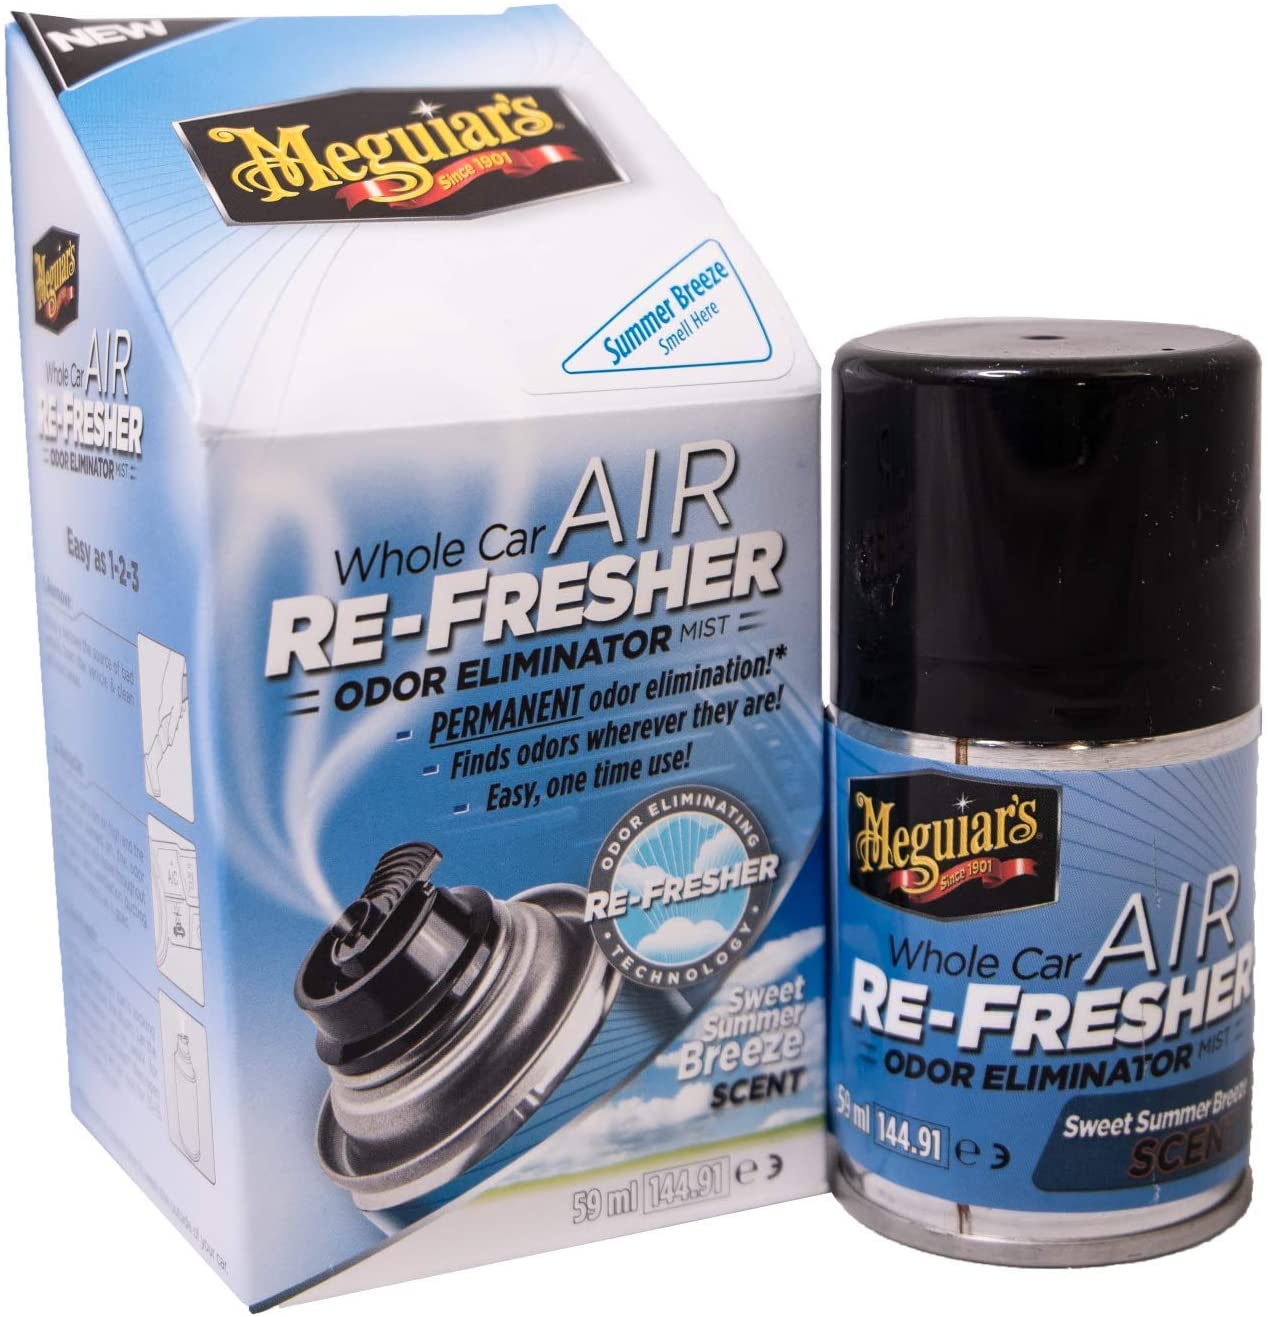 Wholesale Meguiar's G16602EU Whole Car Air Re-Fresher Odor Eliminator Mist  Sweet Summer Breeze Scent Air Bomb 59 ml